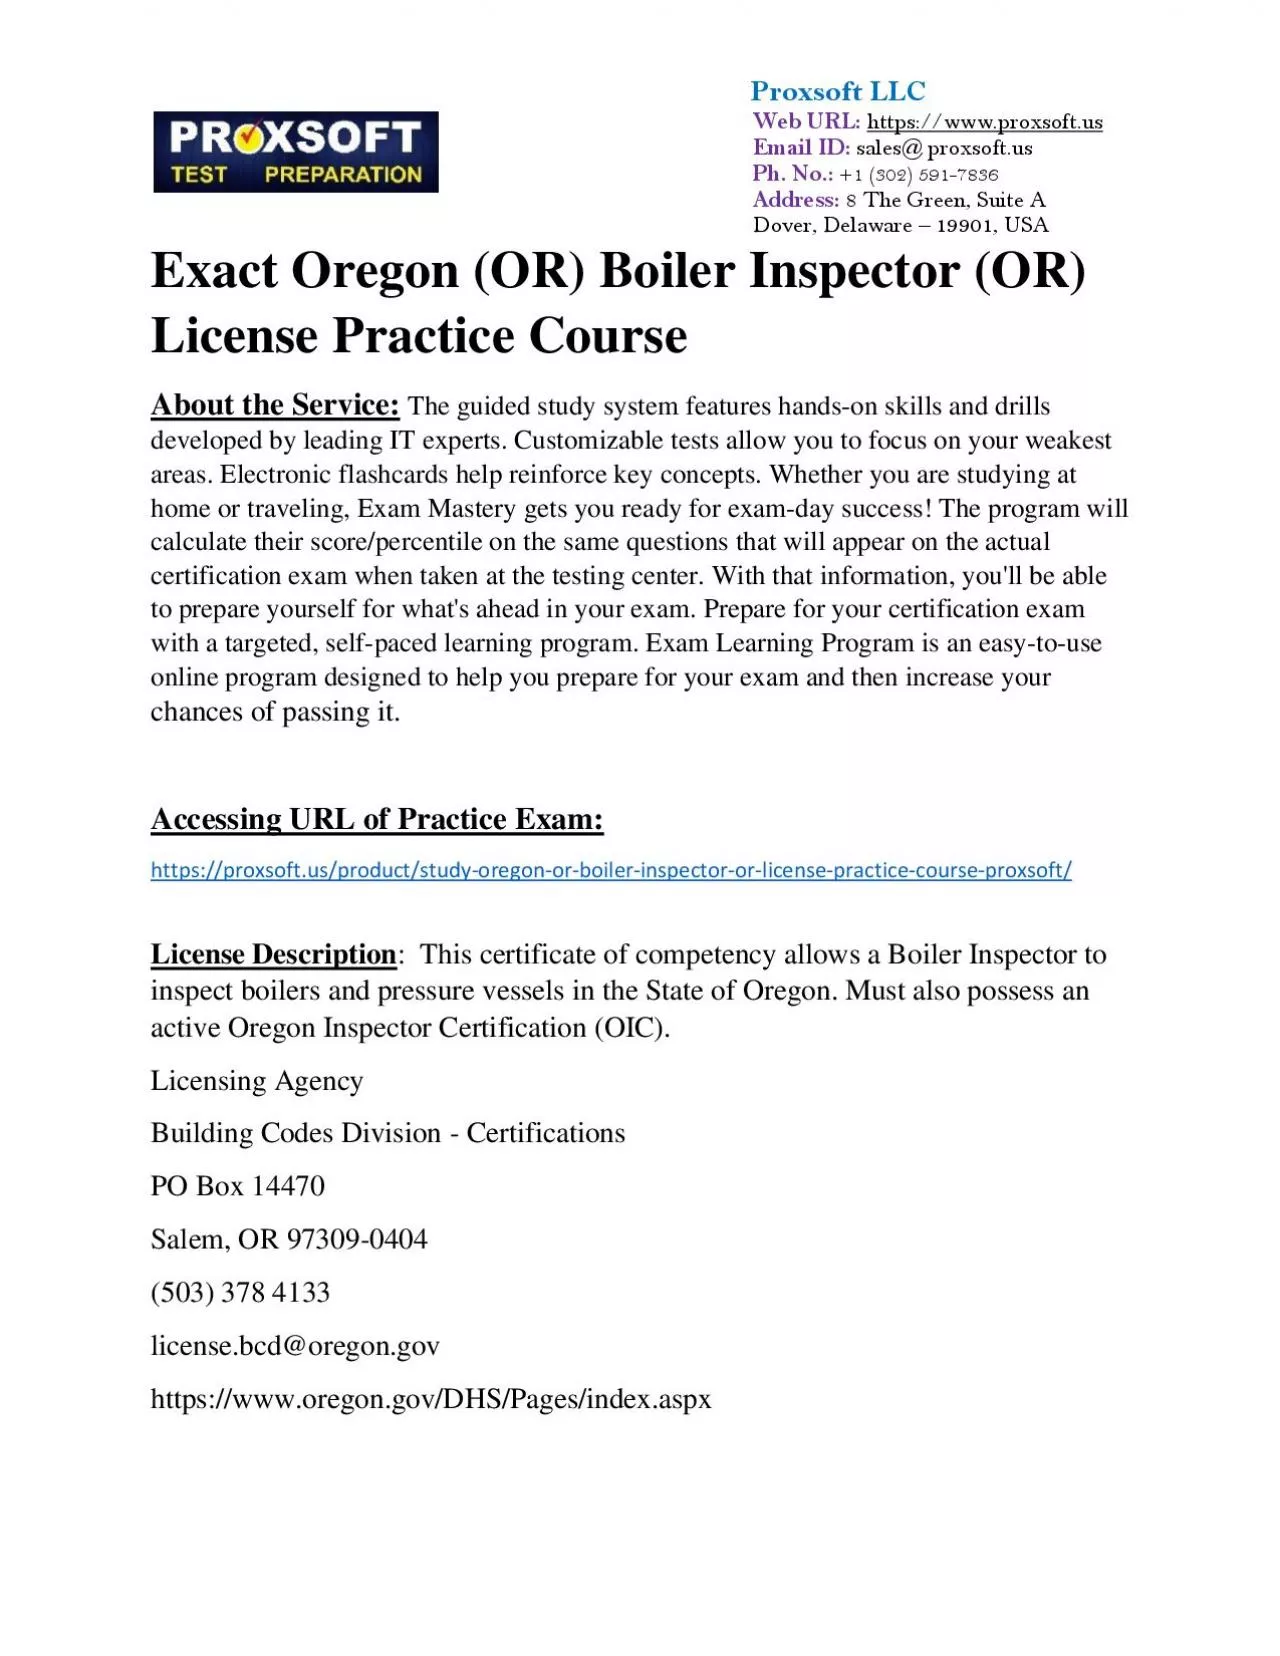 Exact Oregon (OR) Boiler Inspector (OR) License Practice Course